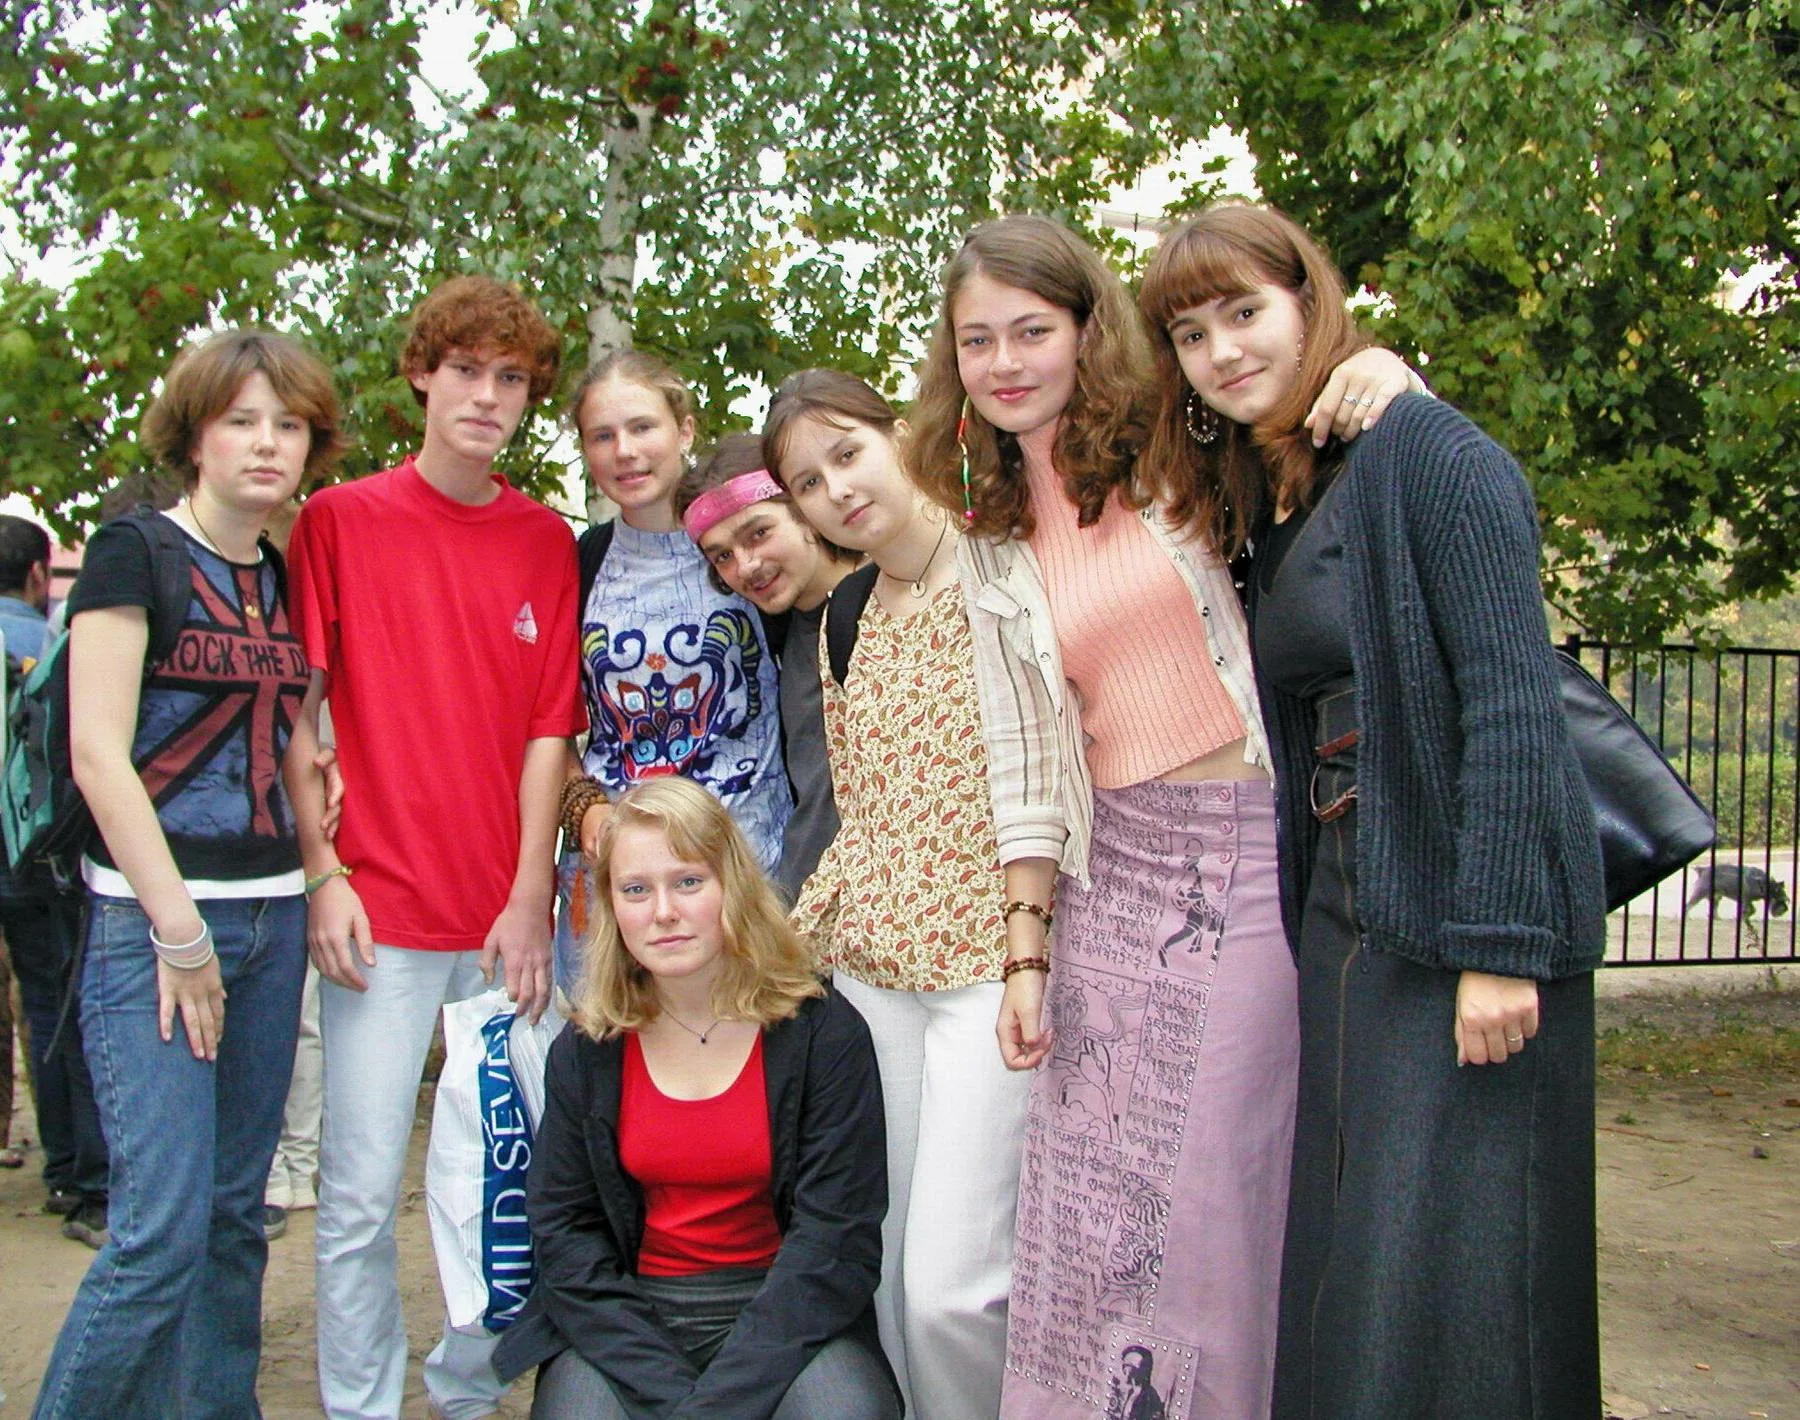 2001 год 18 декабря. Мода 2001 года. Молодежь 2001 года. Молодёжь 2001 год Россия. 2001 Год фото Россия.